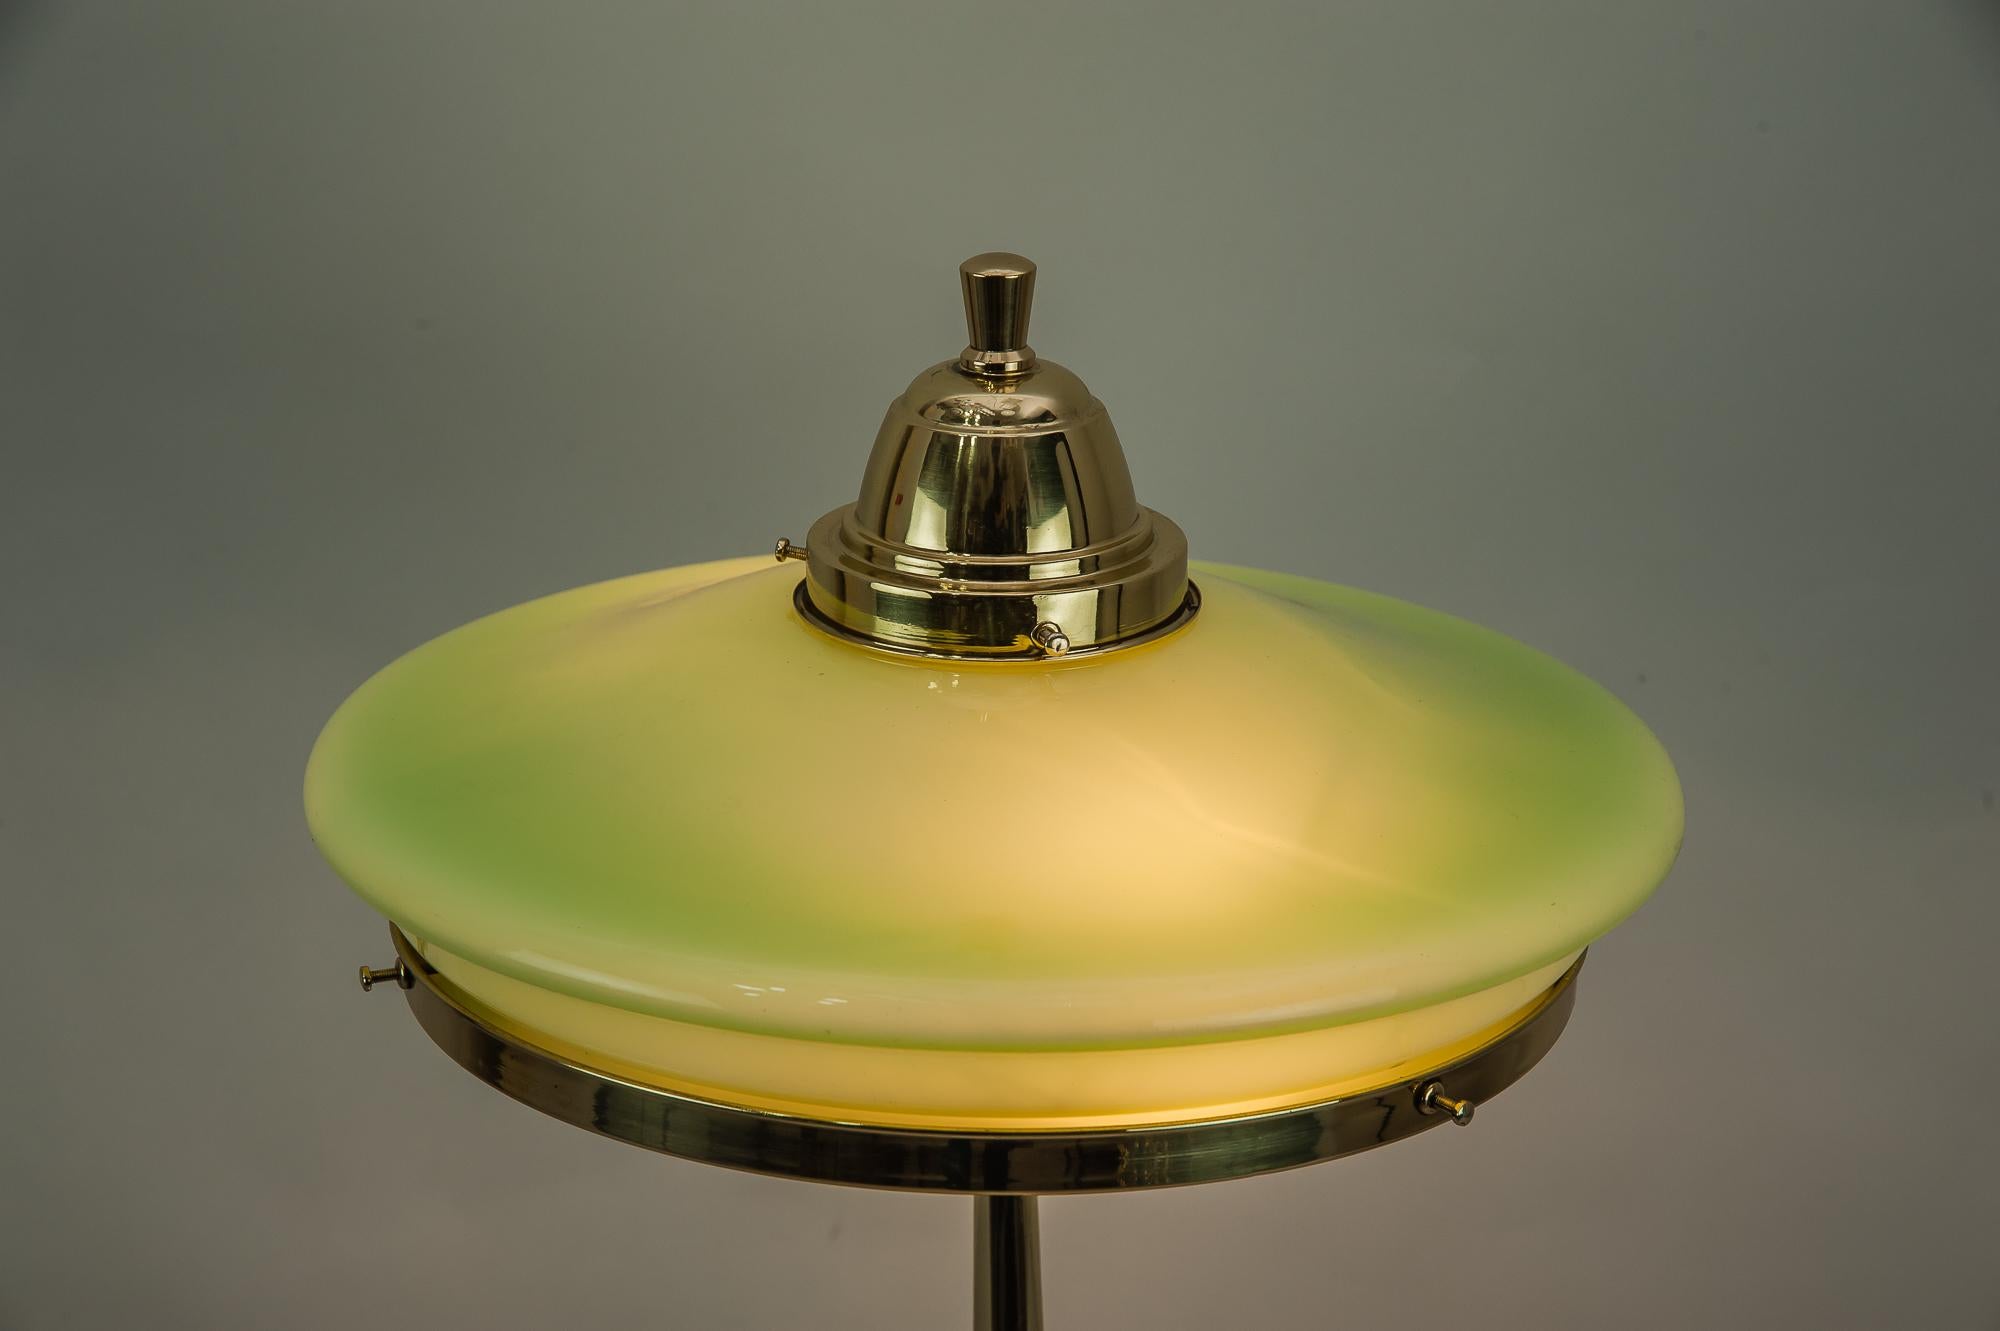 Jugendstil Table Lamp circa 1910s with Original Glass (Messing)